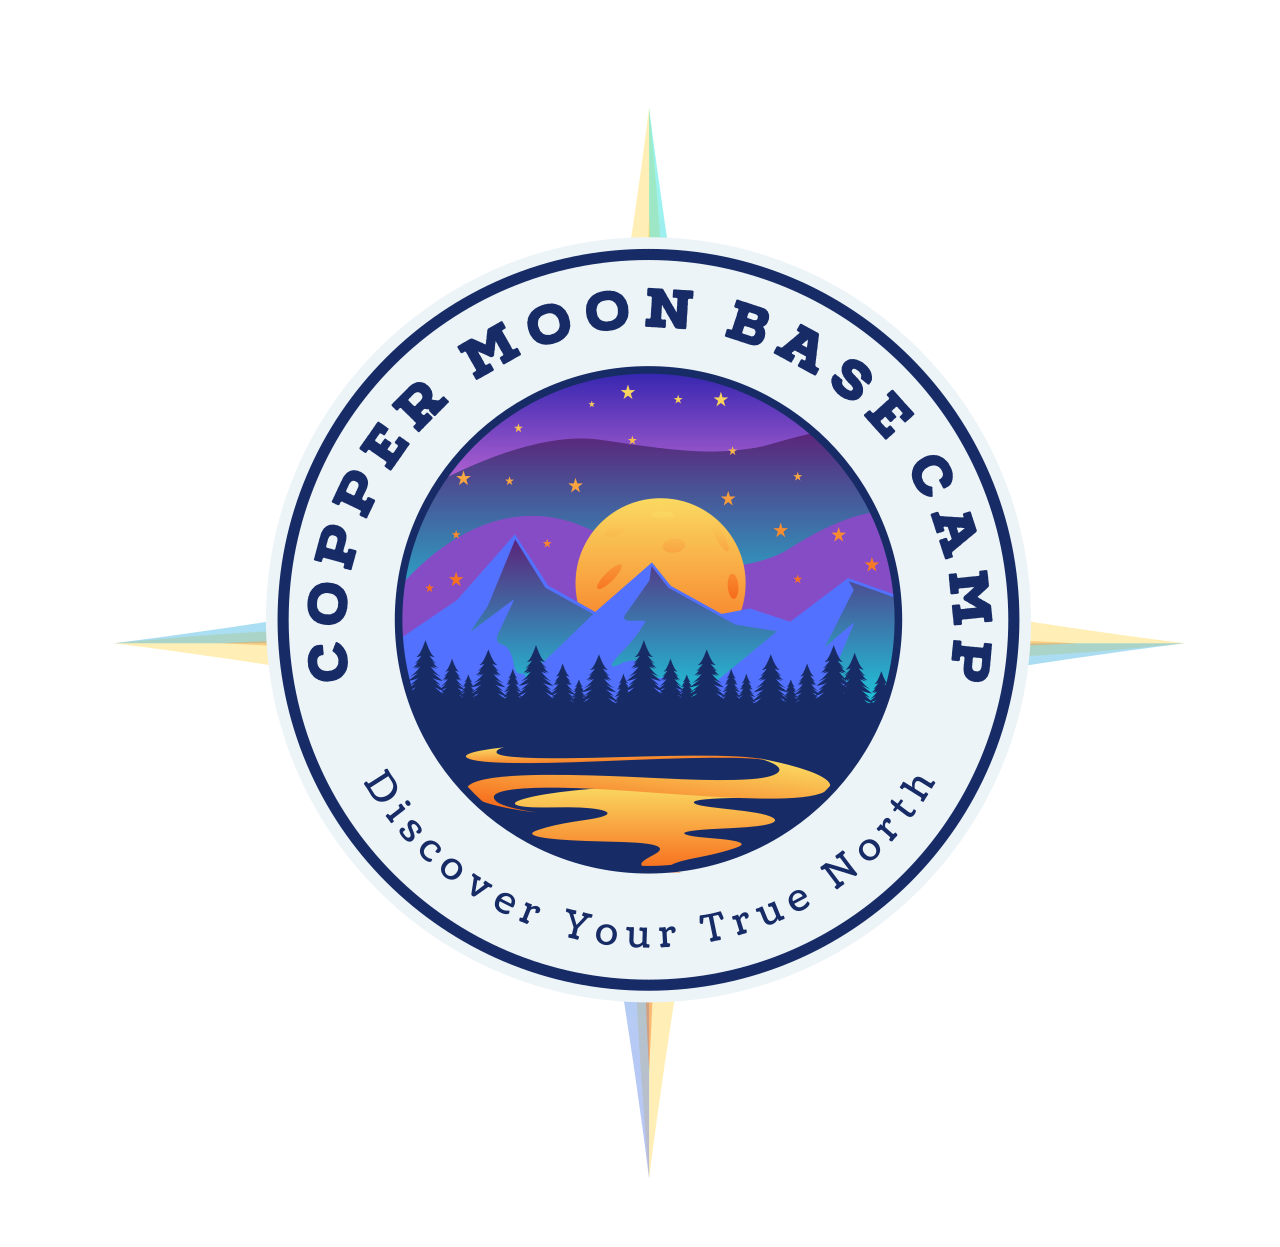 COPPER MOON BASE CAMP's logo